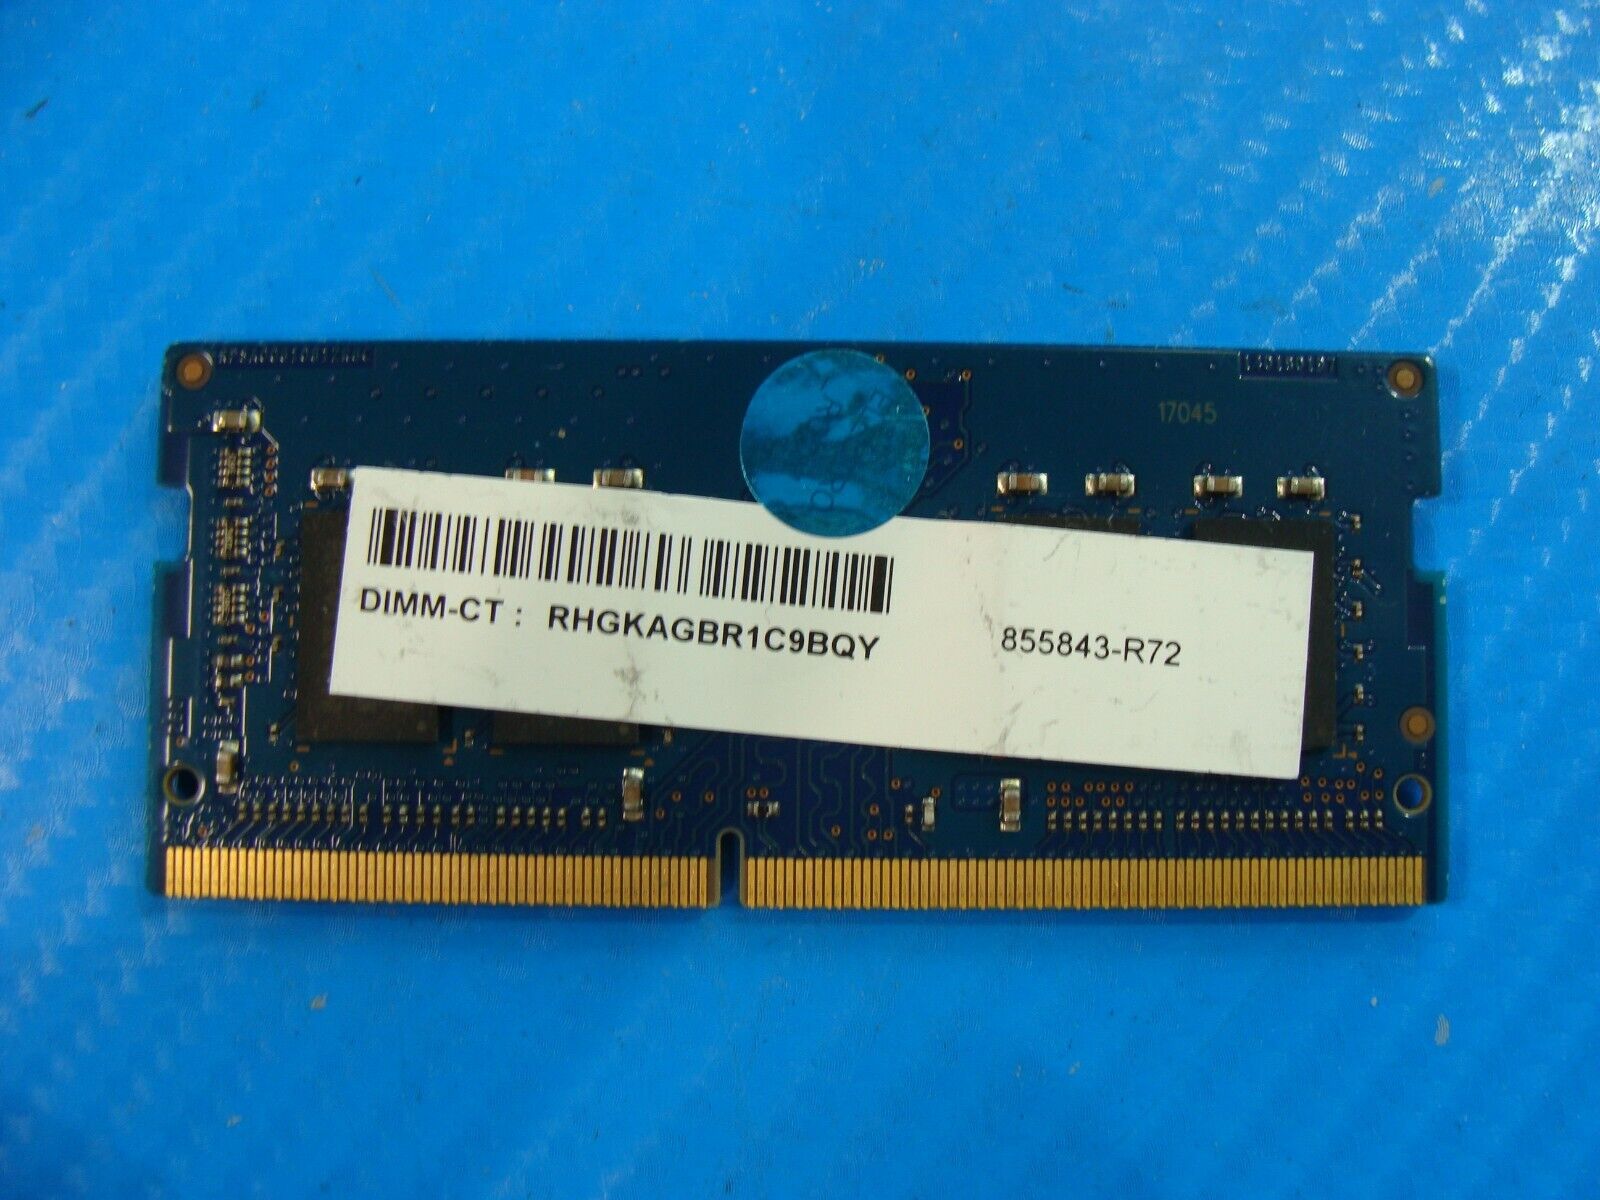 Acer AN517-51-56YW So-Dim Ramaxel 8GB 1Rx8 Memory PC4-2400T RMSA3260NA78HAF-2400